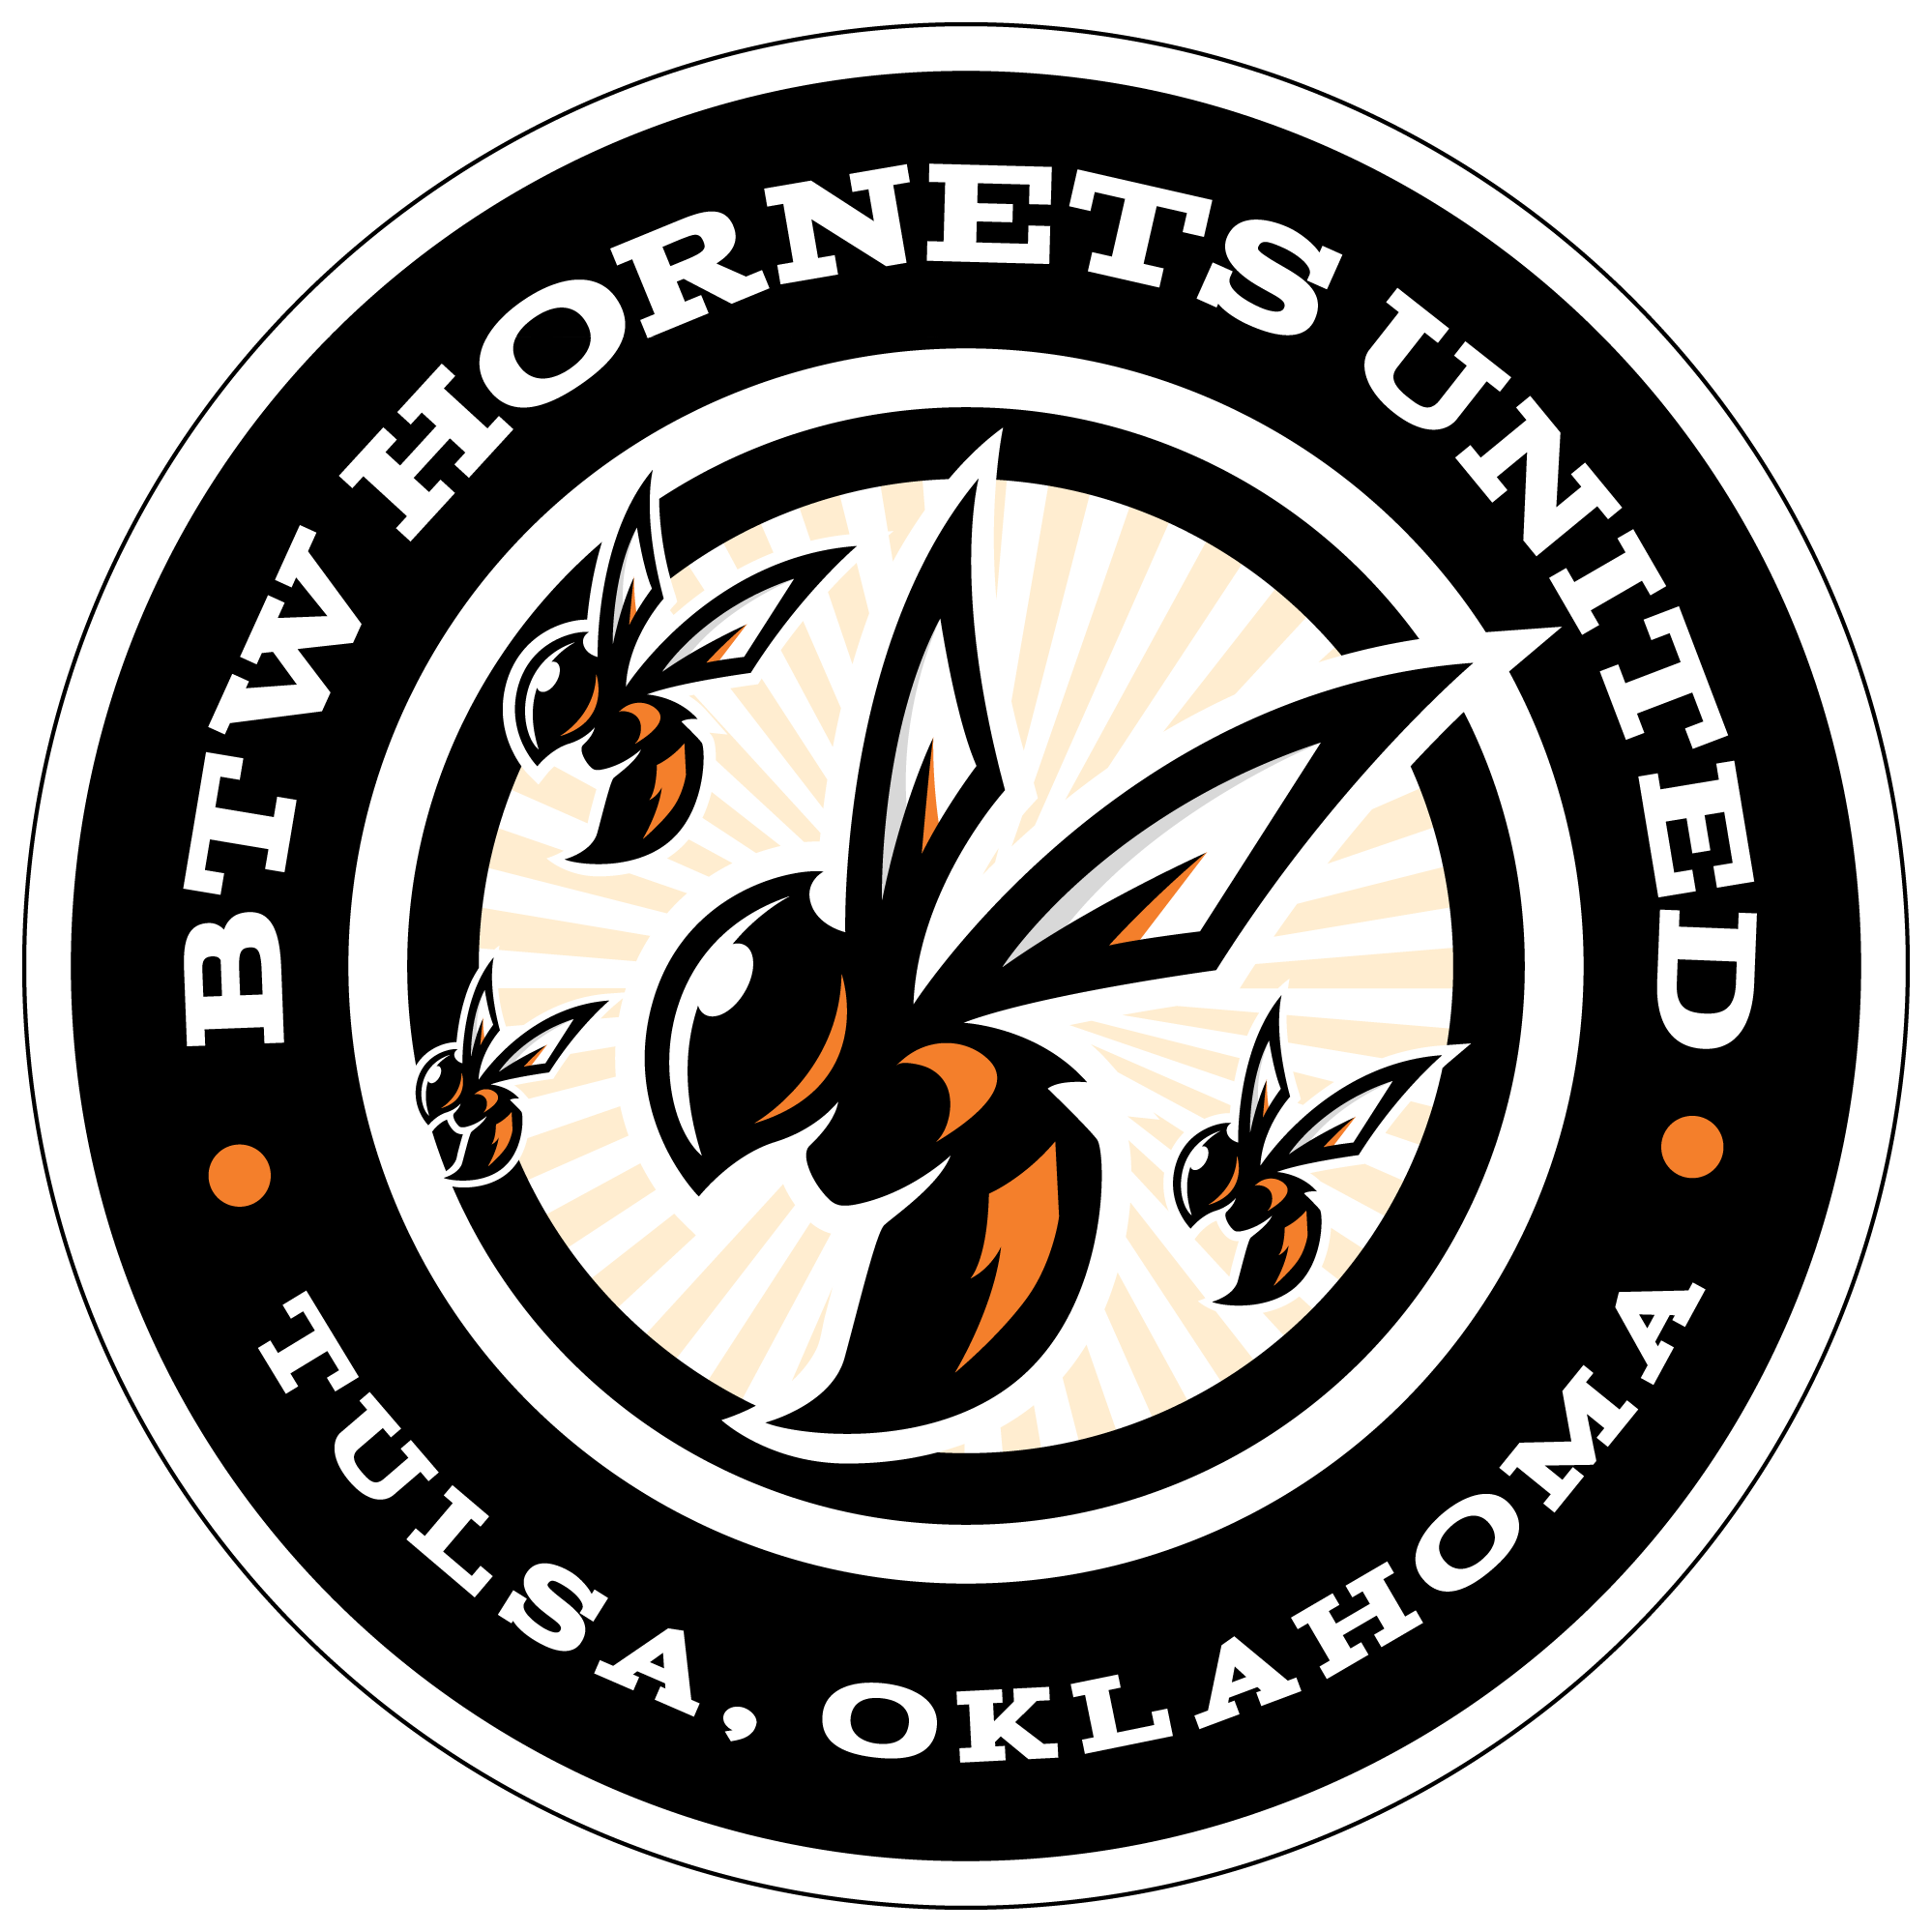 BTW Hornets United